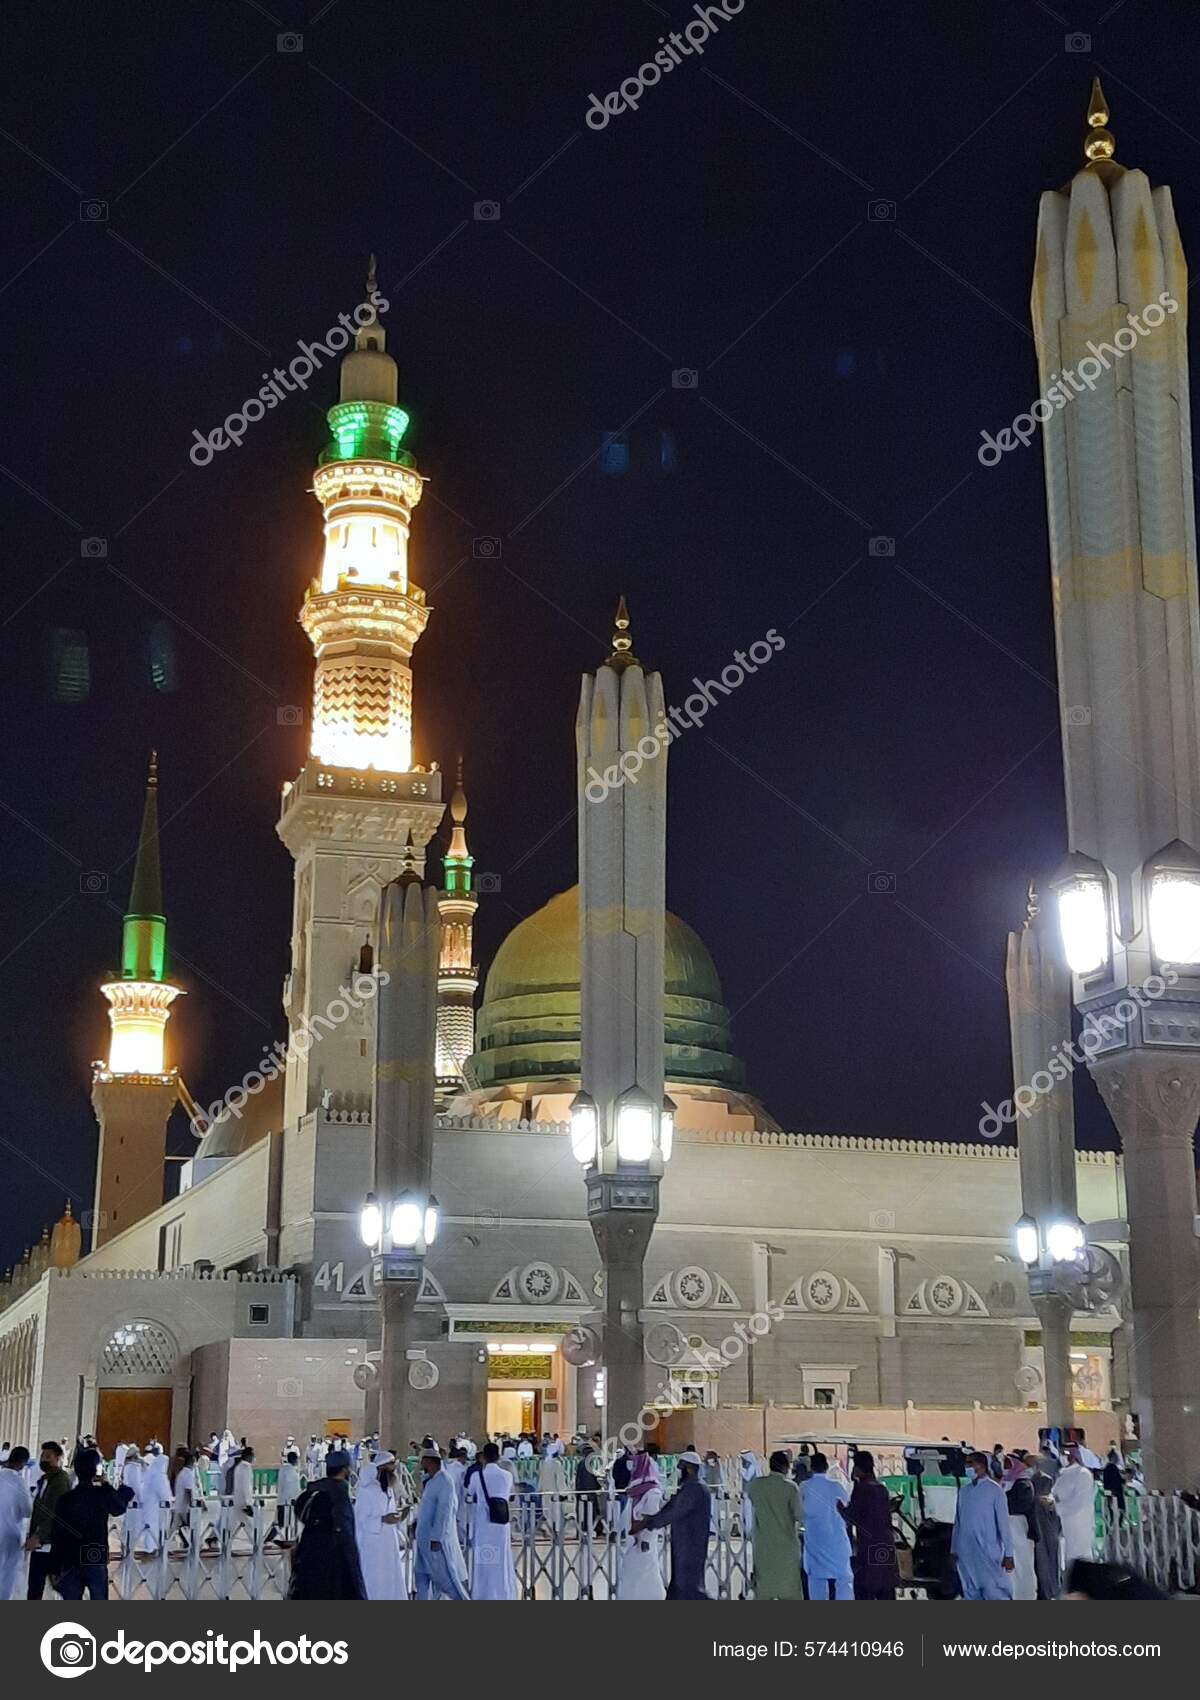 Masjid al nawai Stock Photos, Royalty Free Masjid al nawai Images |  Depositphotos